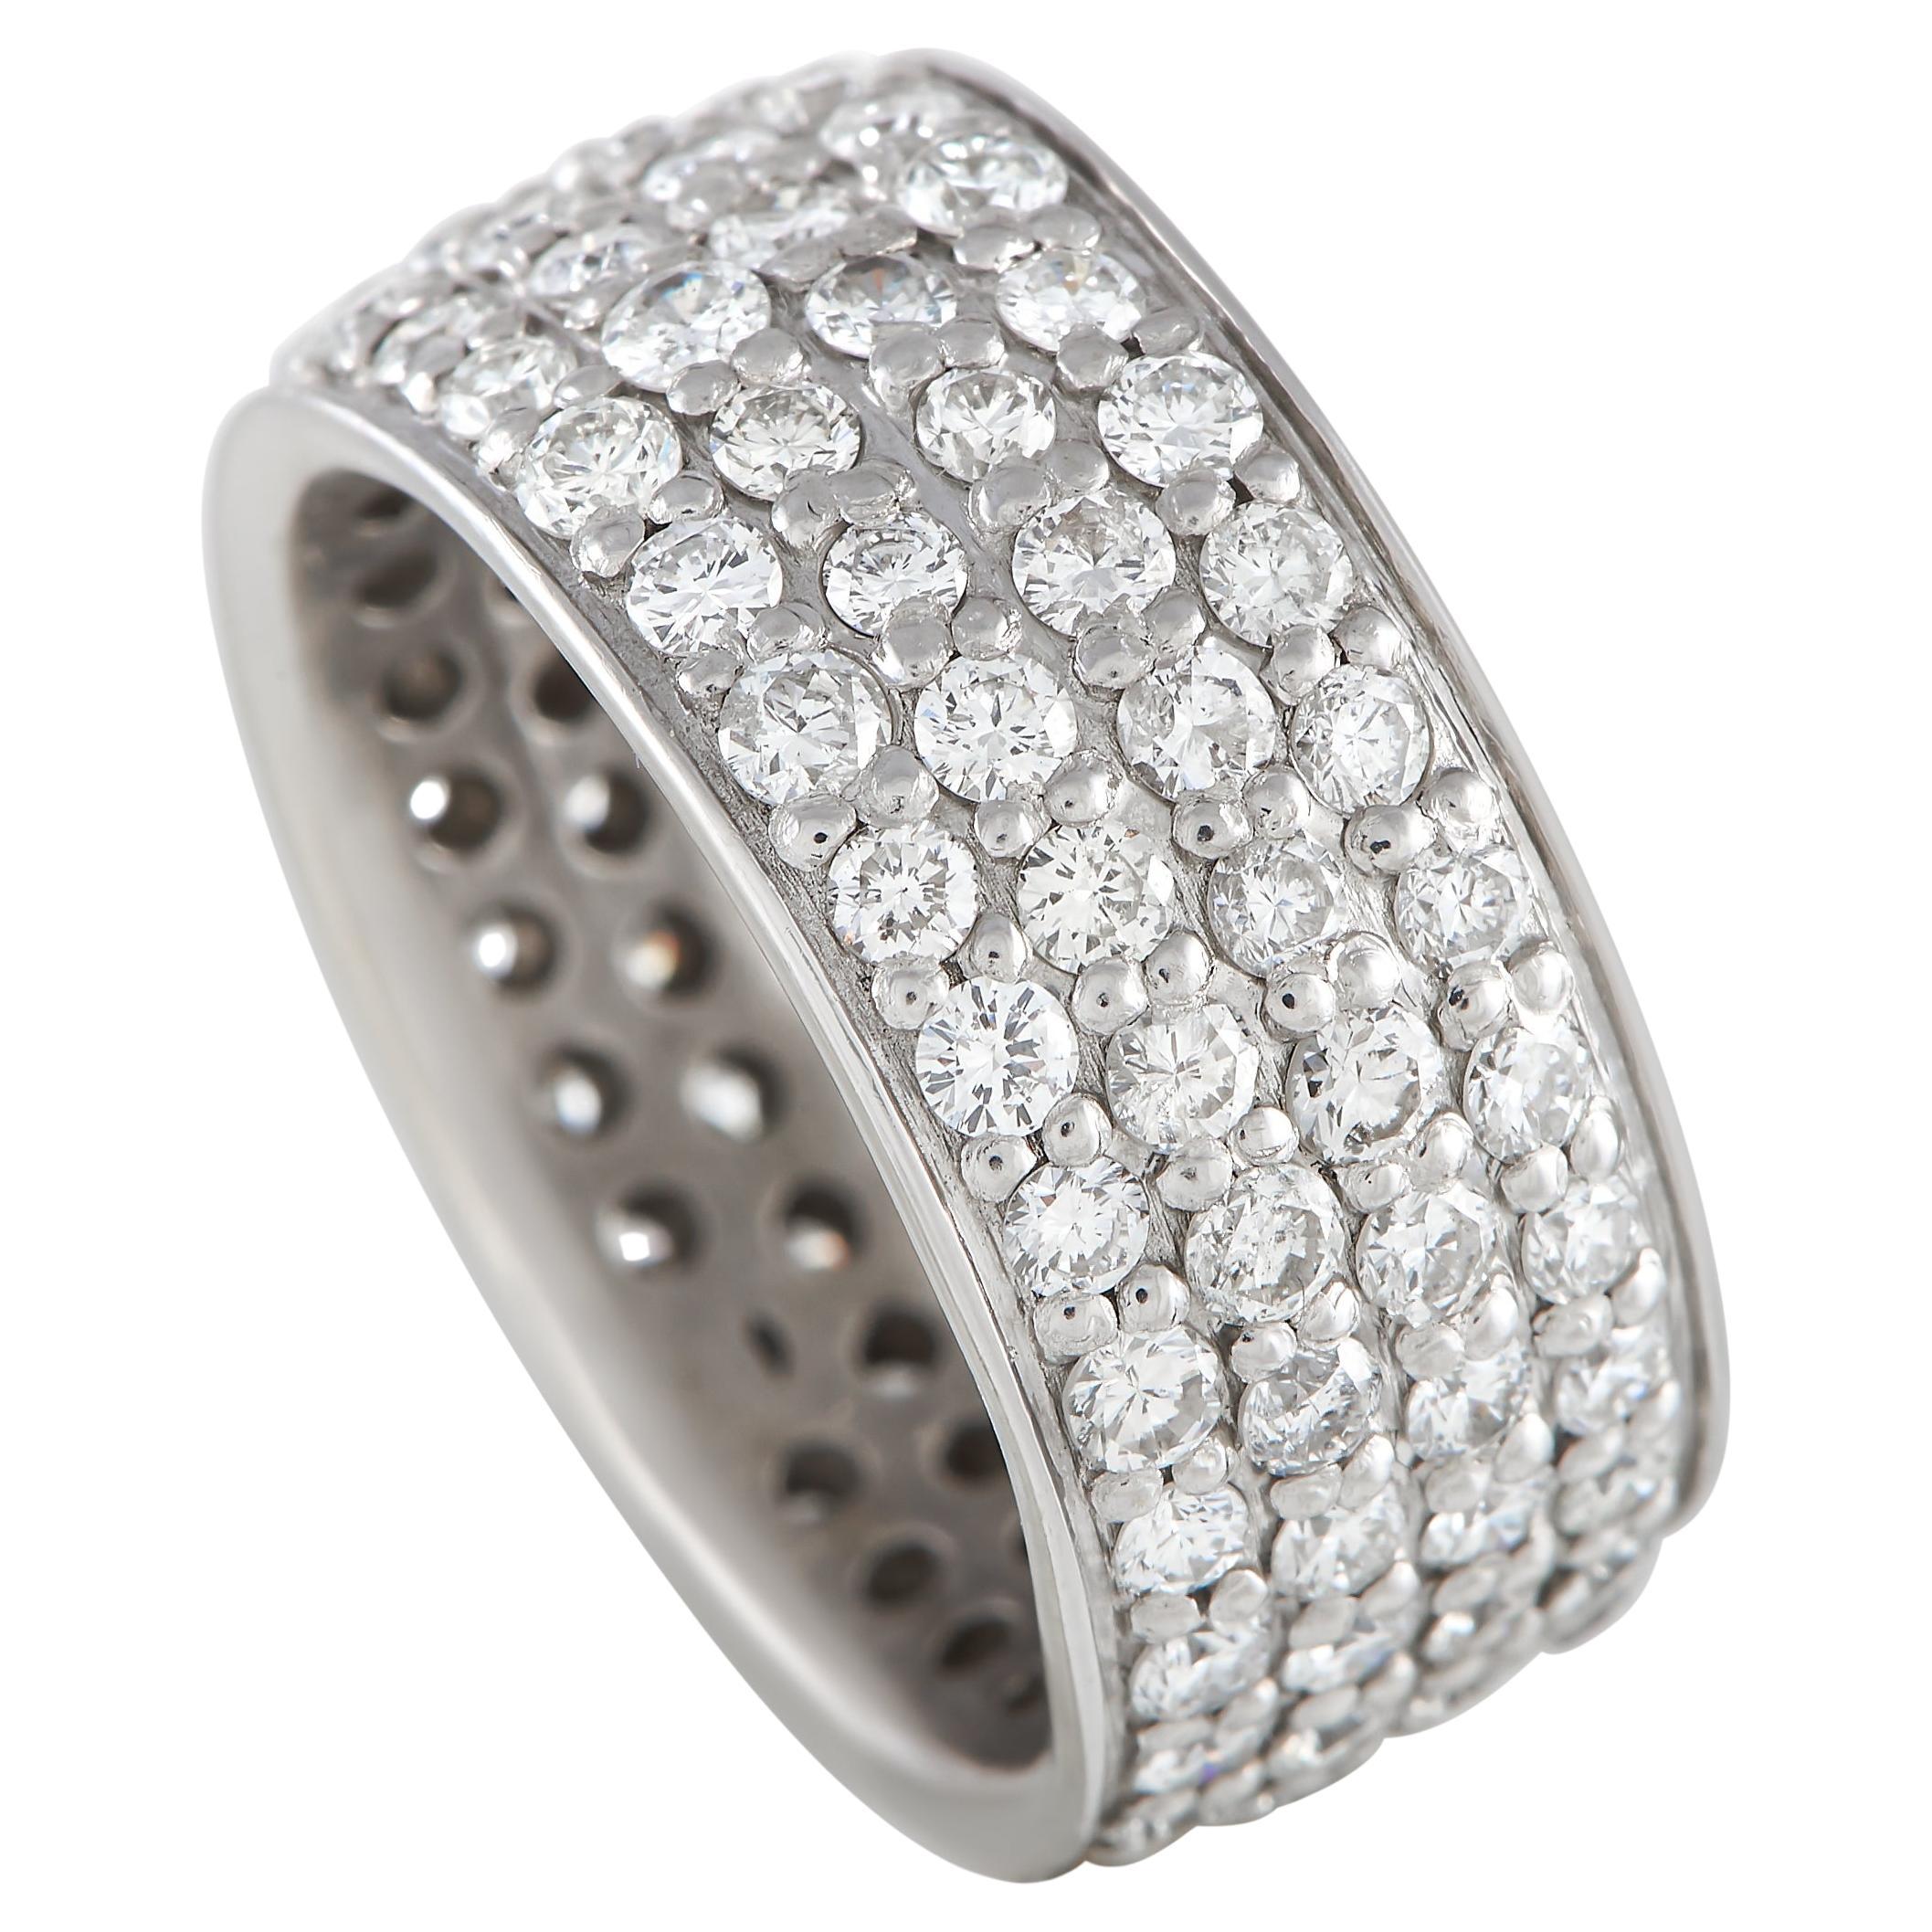 LB Exclusive Platinum 3.0 Carat Diamond Wide Band Ring